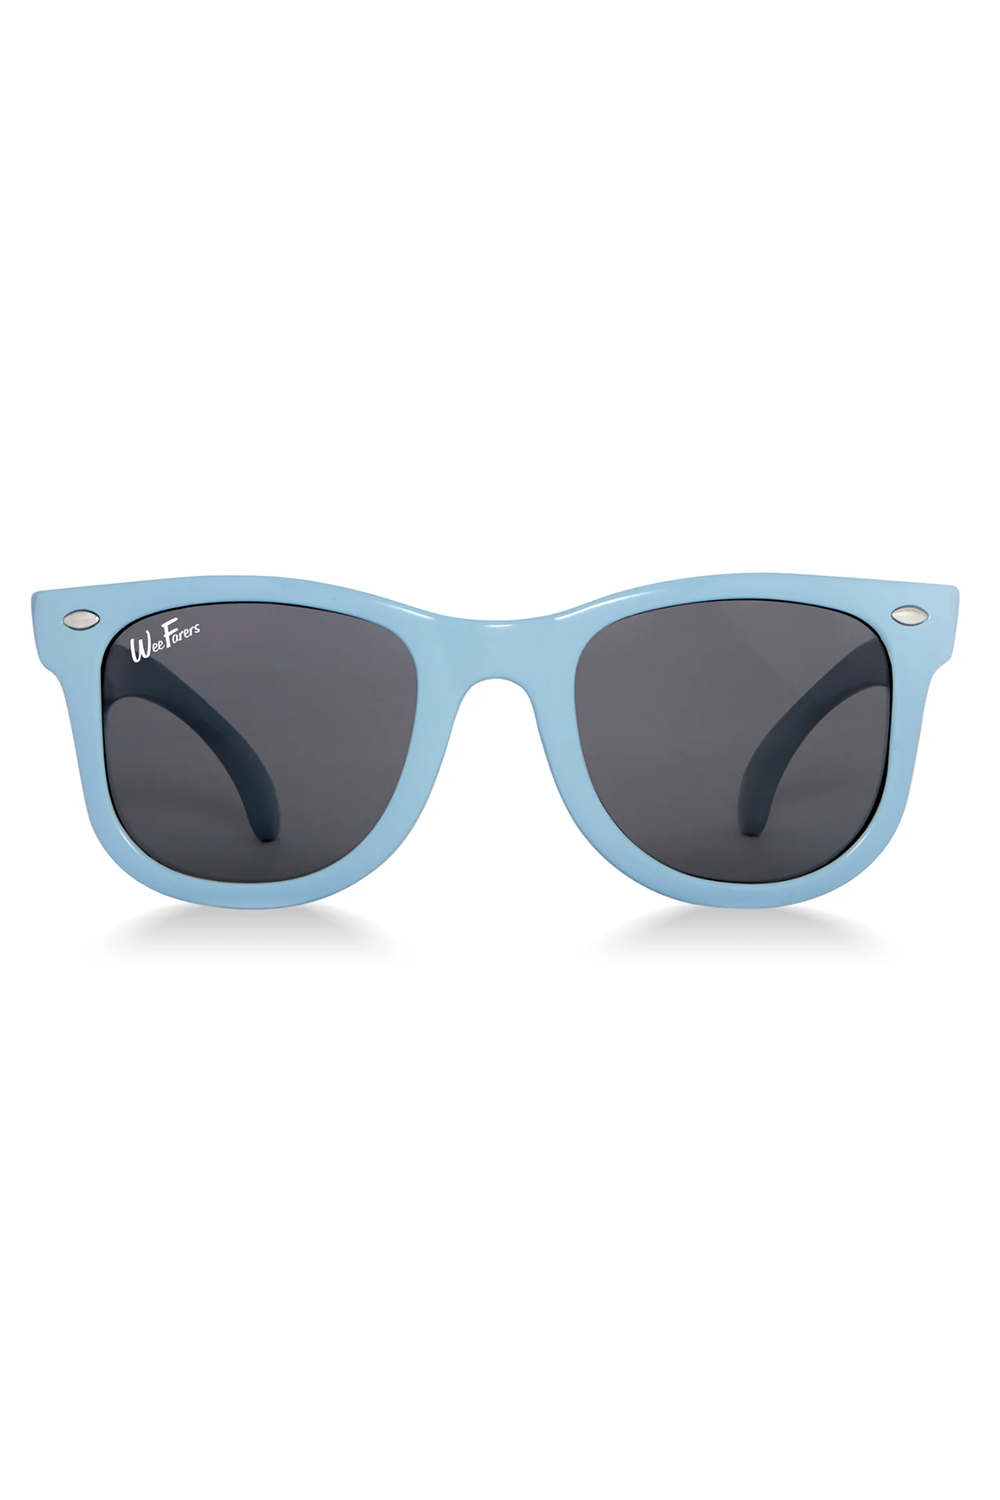 WeeFarers Non-Polarized Kids Sunglasses - Blue